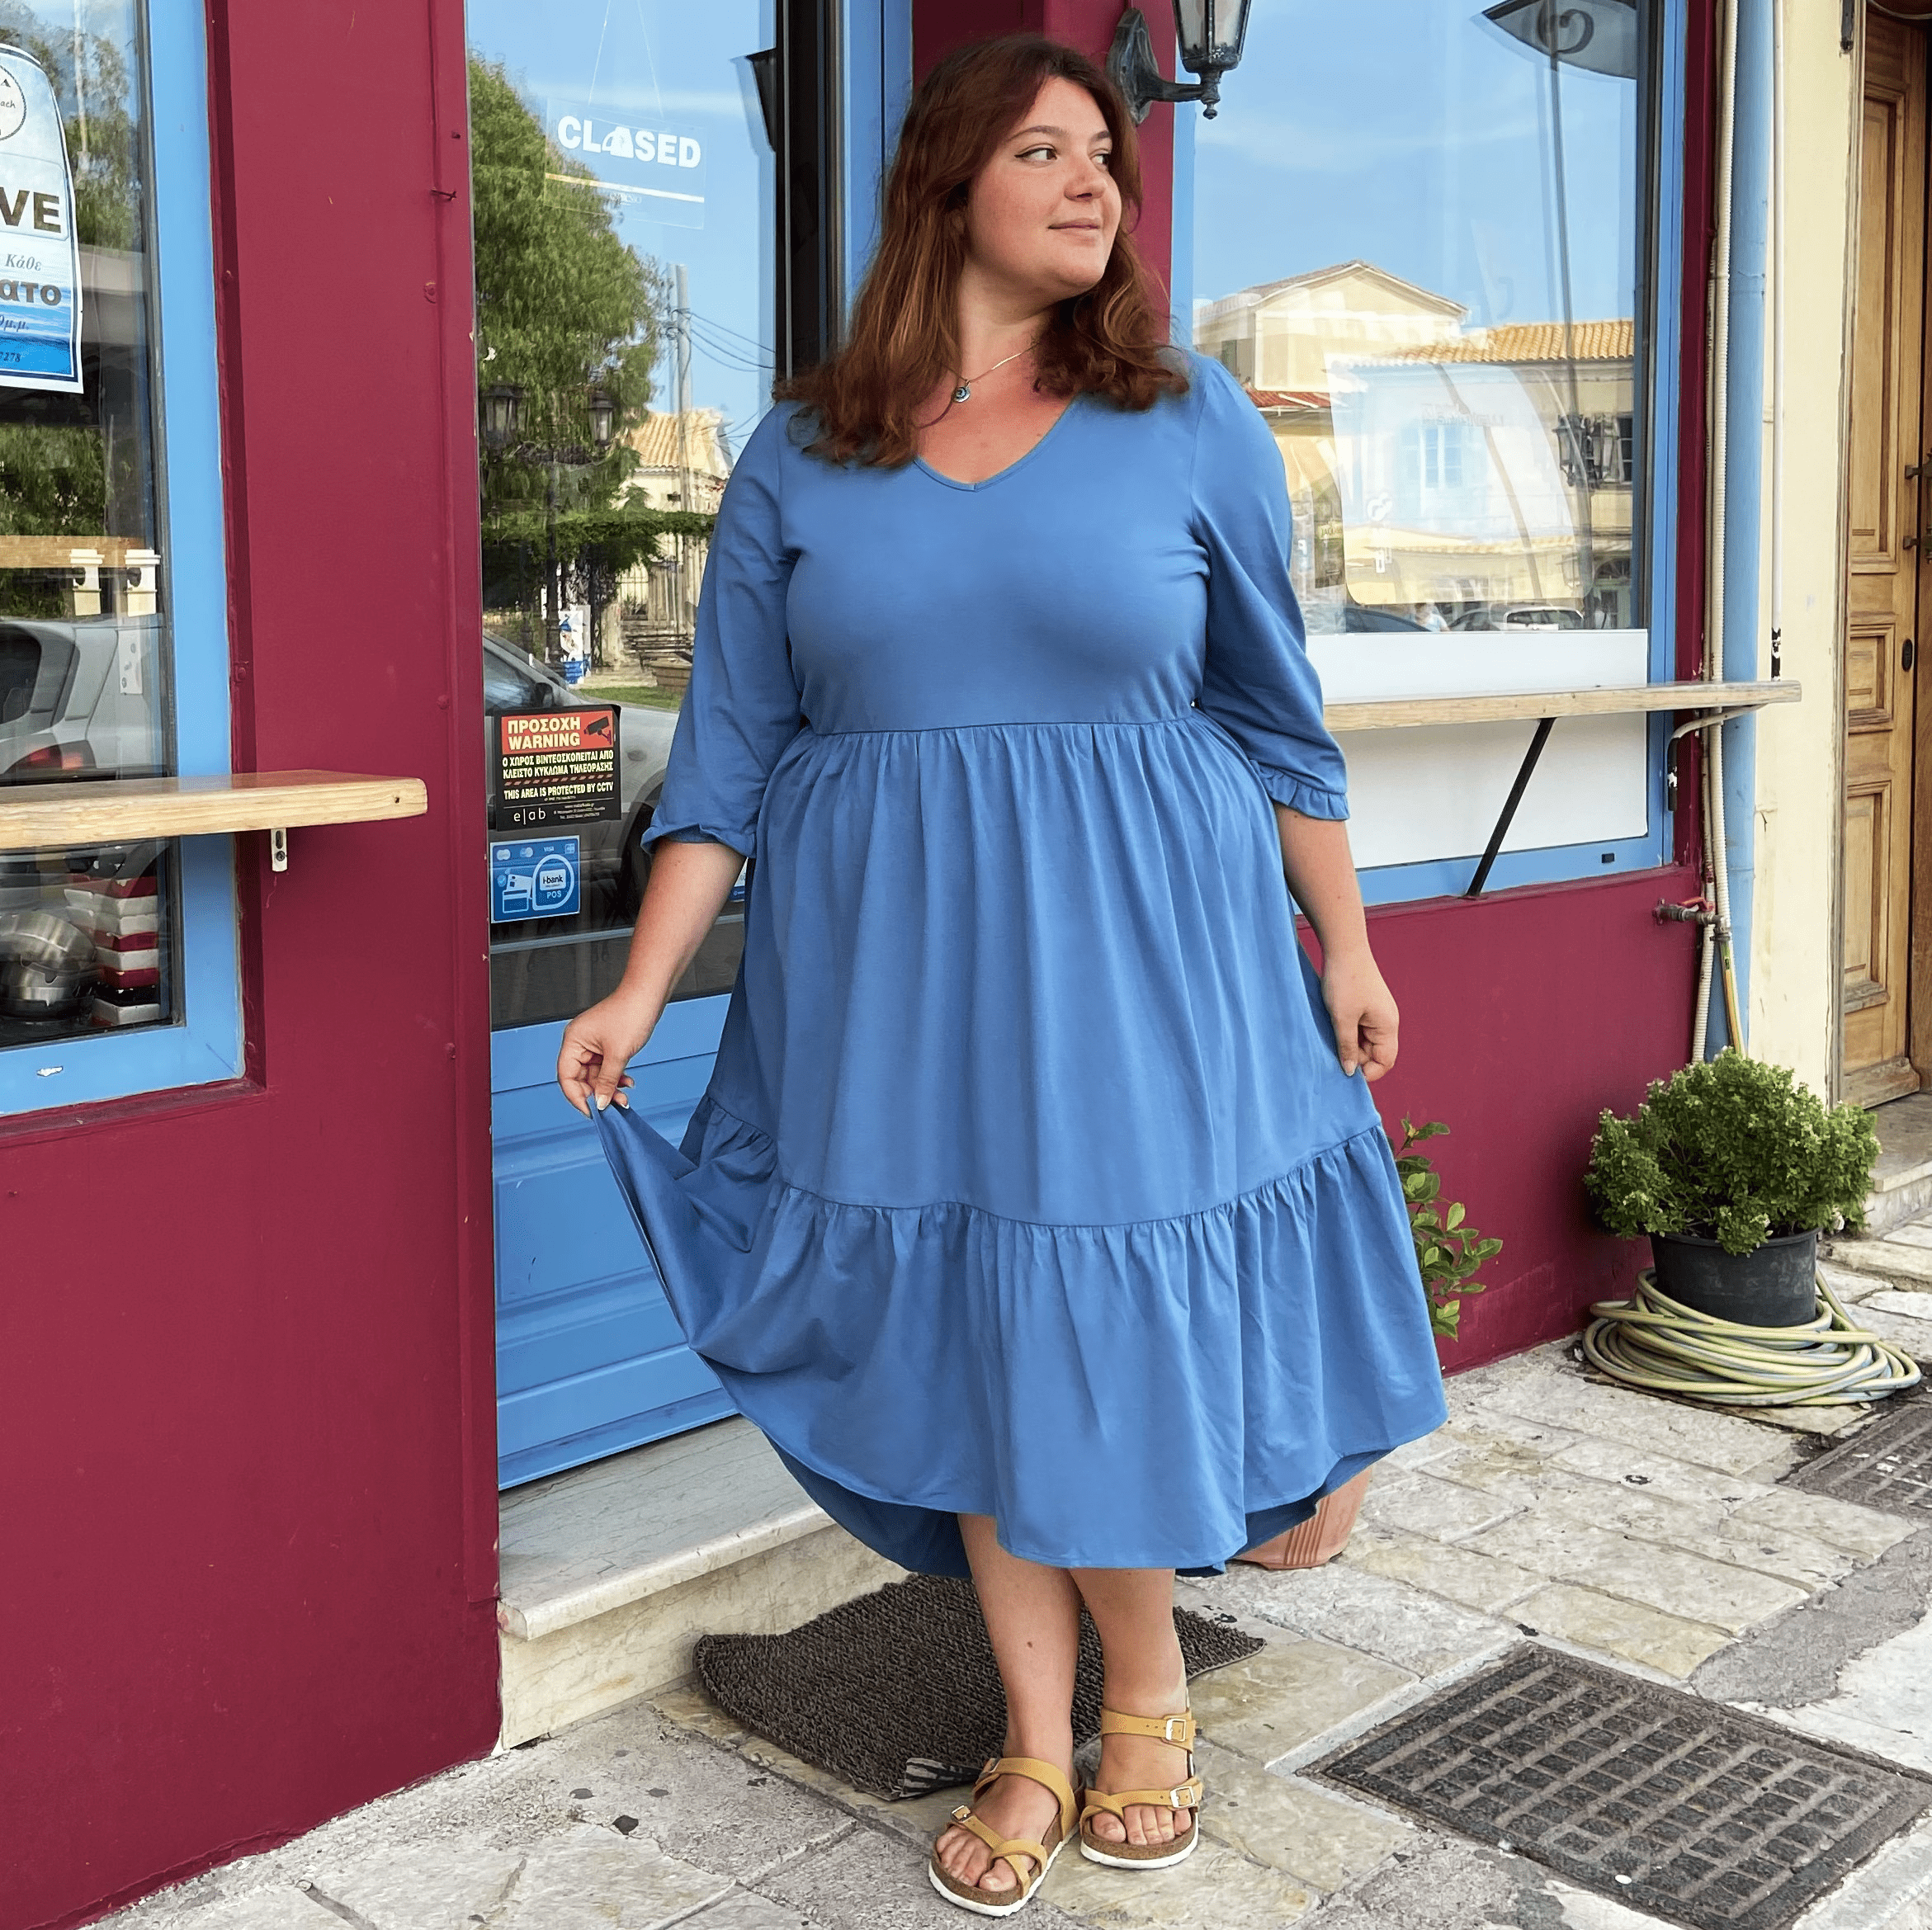 Pastel Dreams Striped Colorblock Midi Dress – Ivy & Olive Boutique